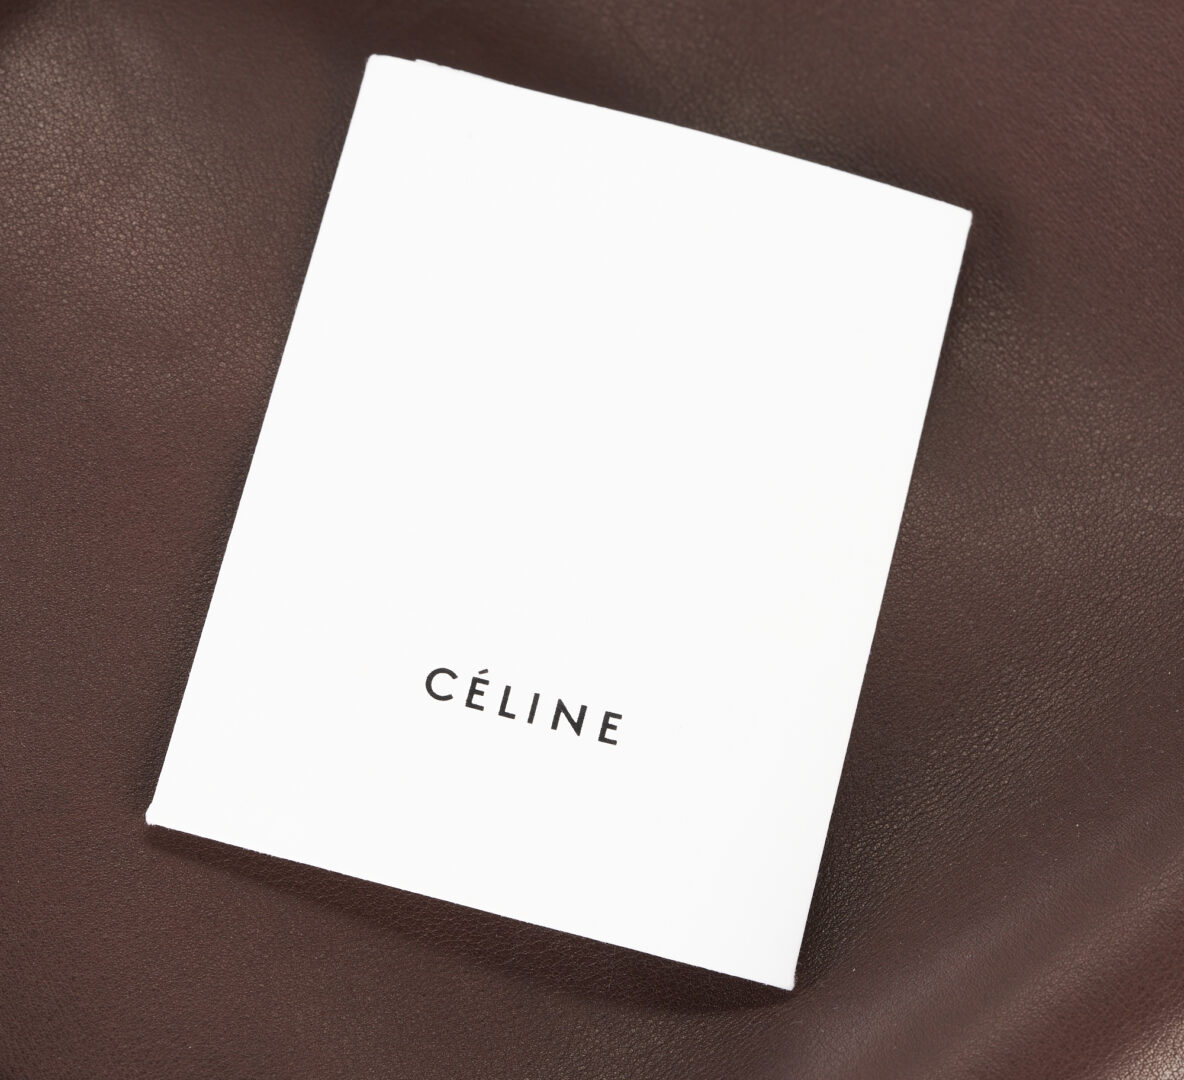 Lot 793: Celine "Big Bag" Tote Medium in Dark Brown